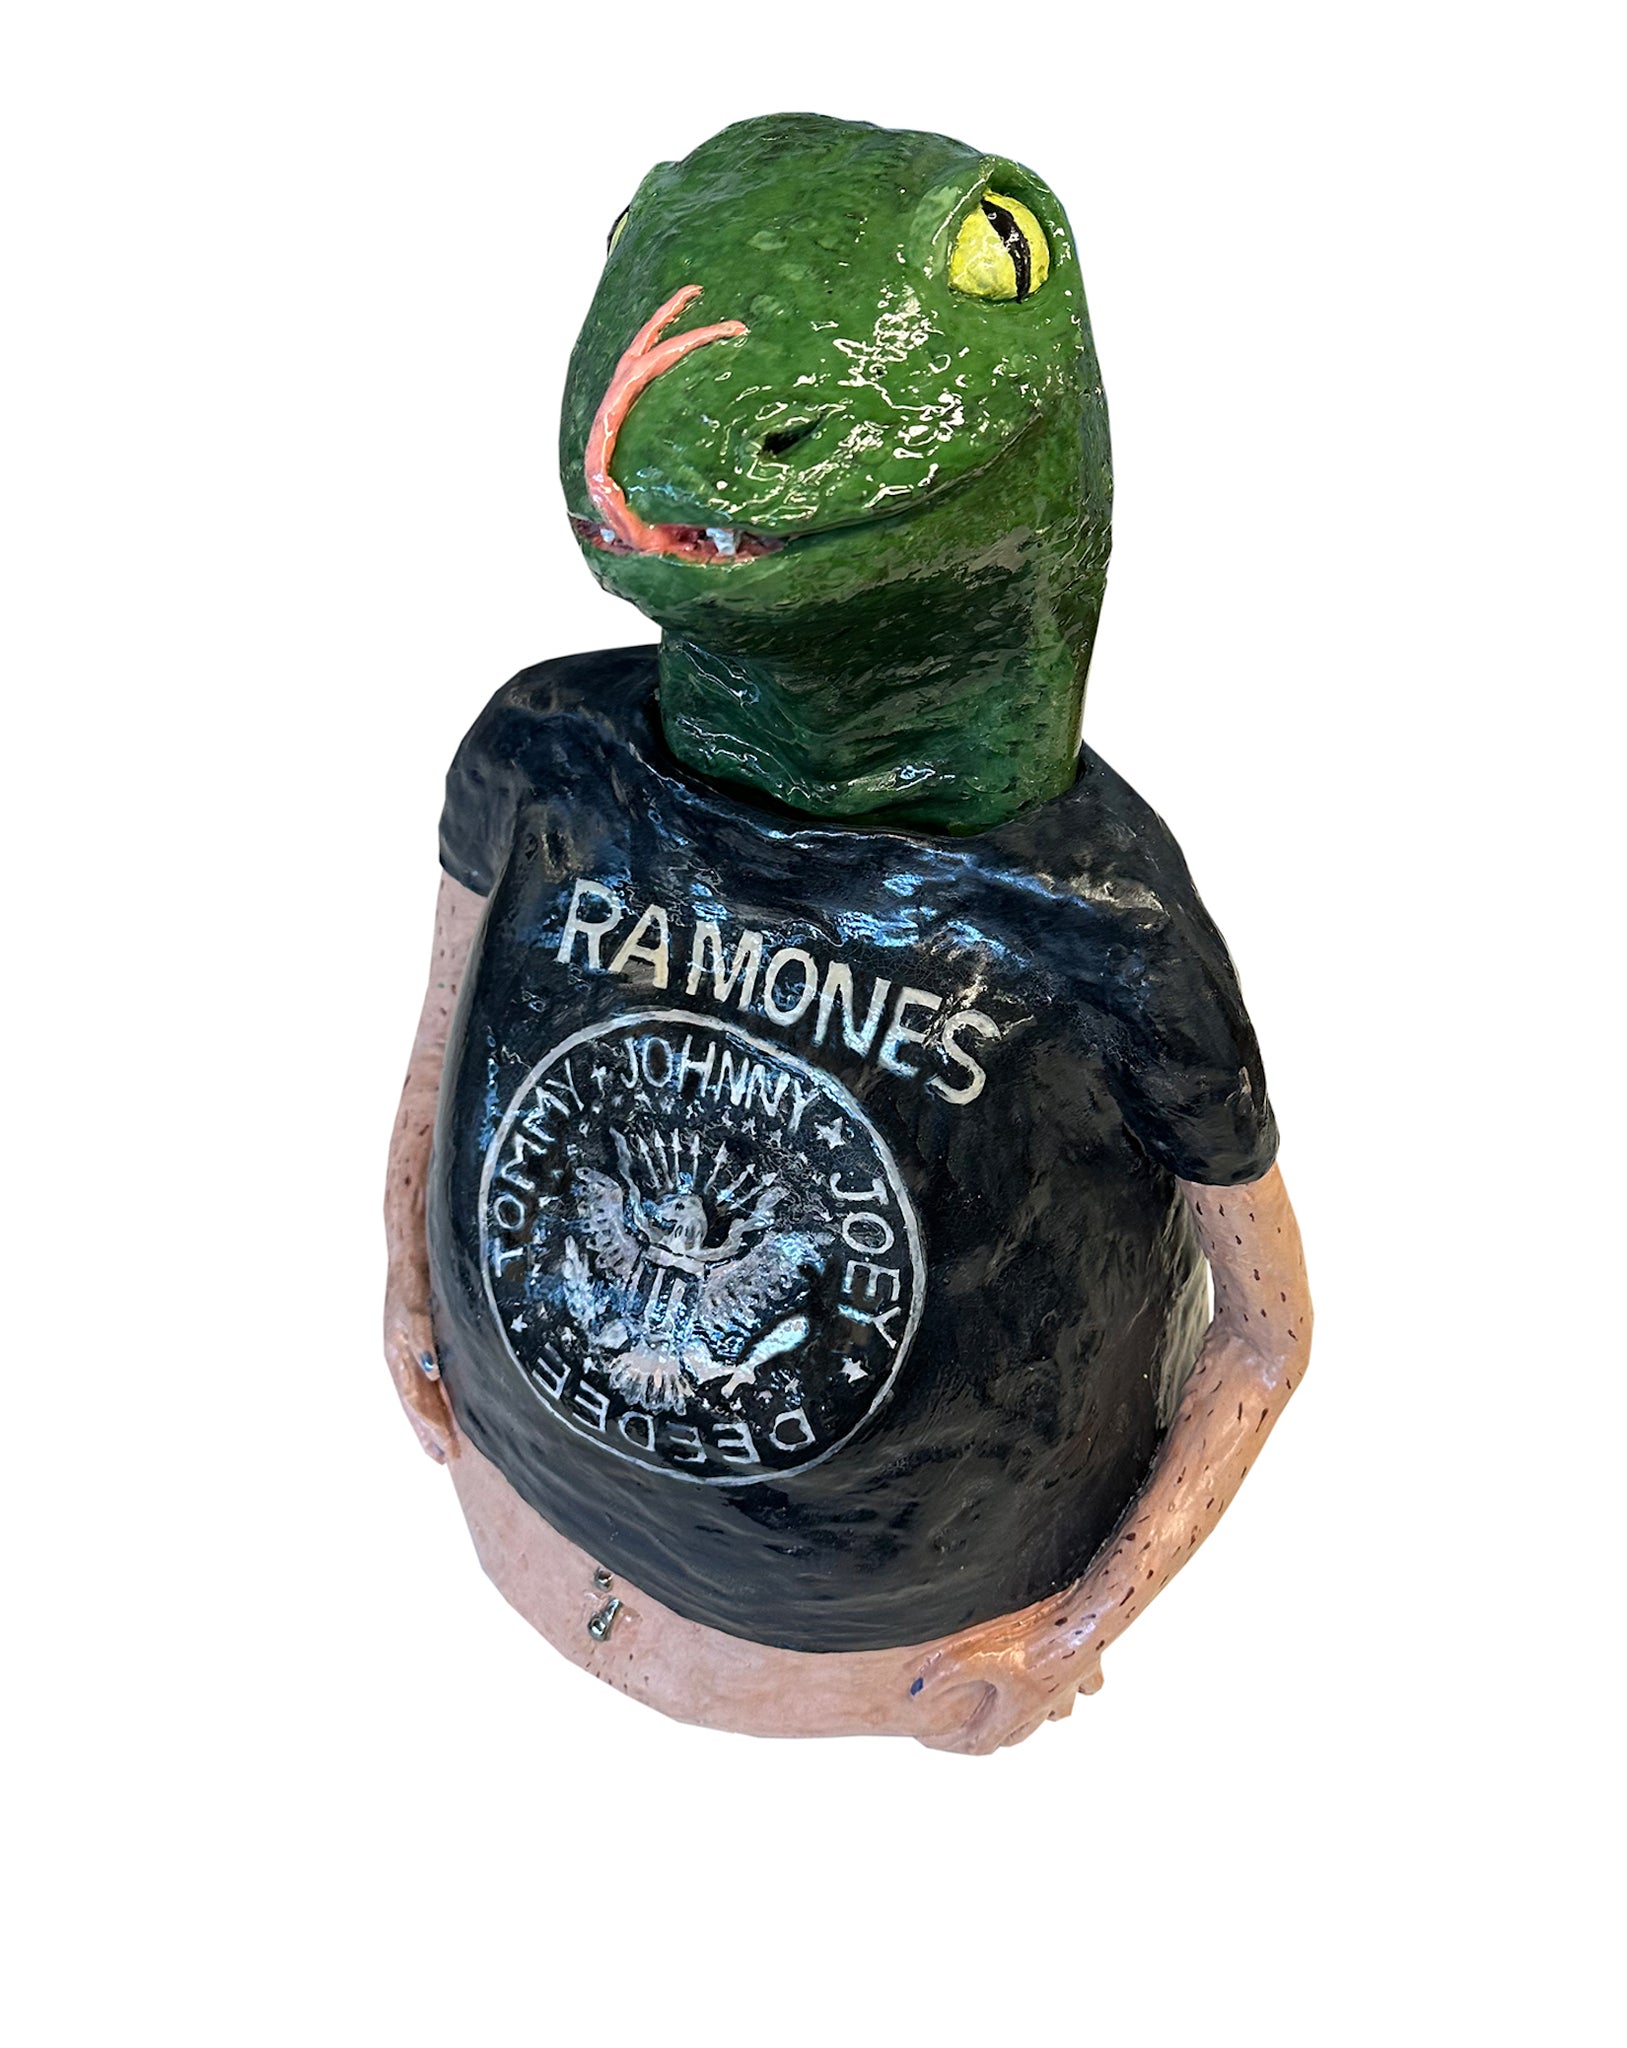 Dasha Bazanova, "Lizard Ramones Fan"